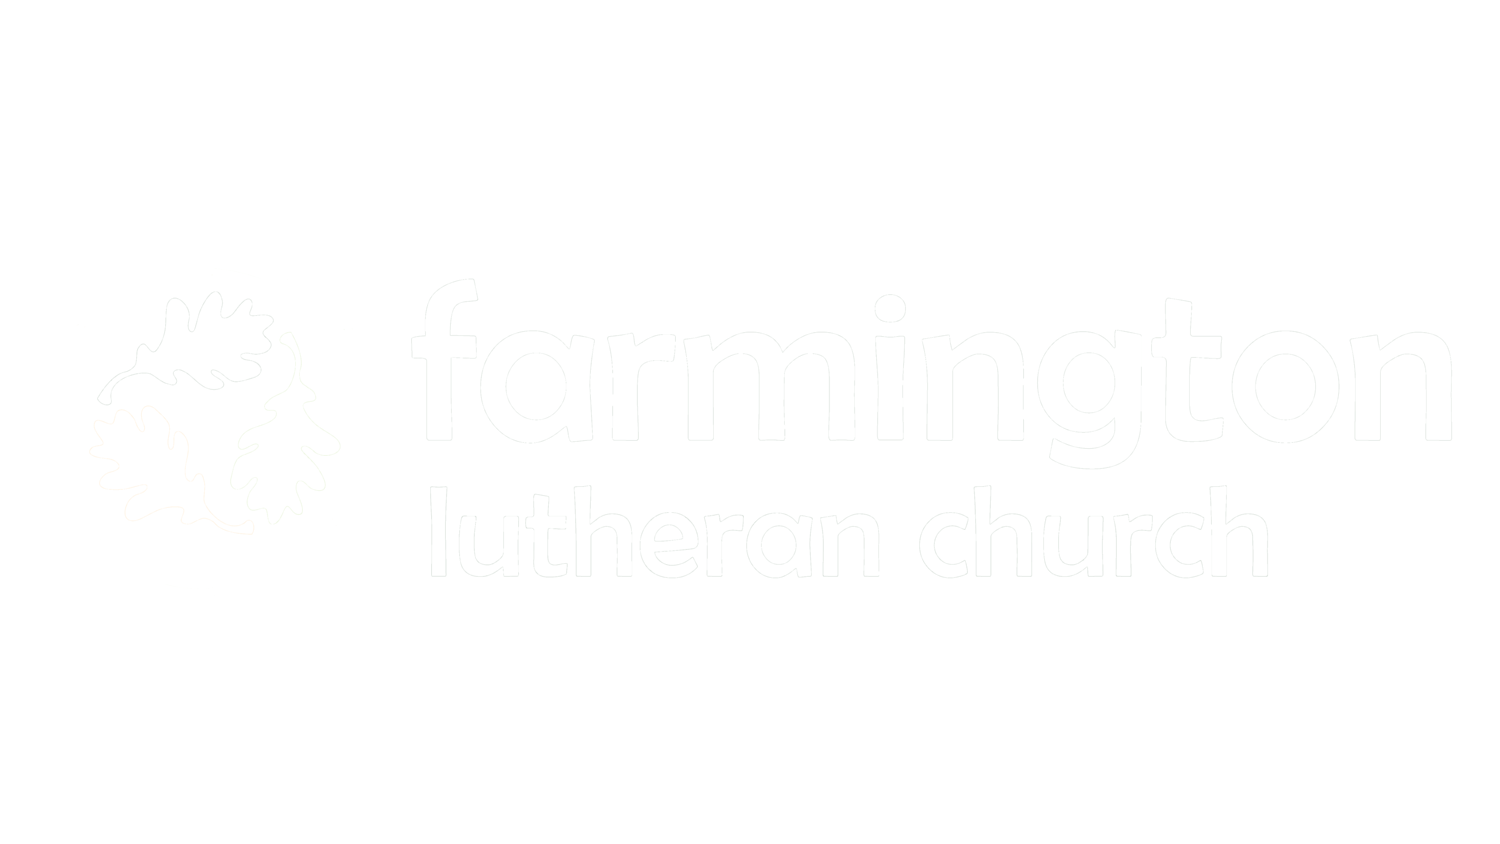 Farmington Lutheran